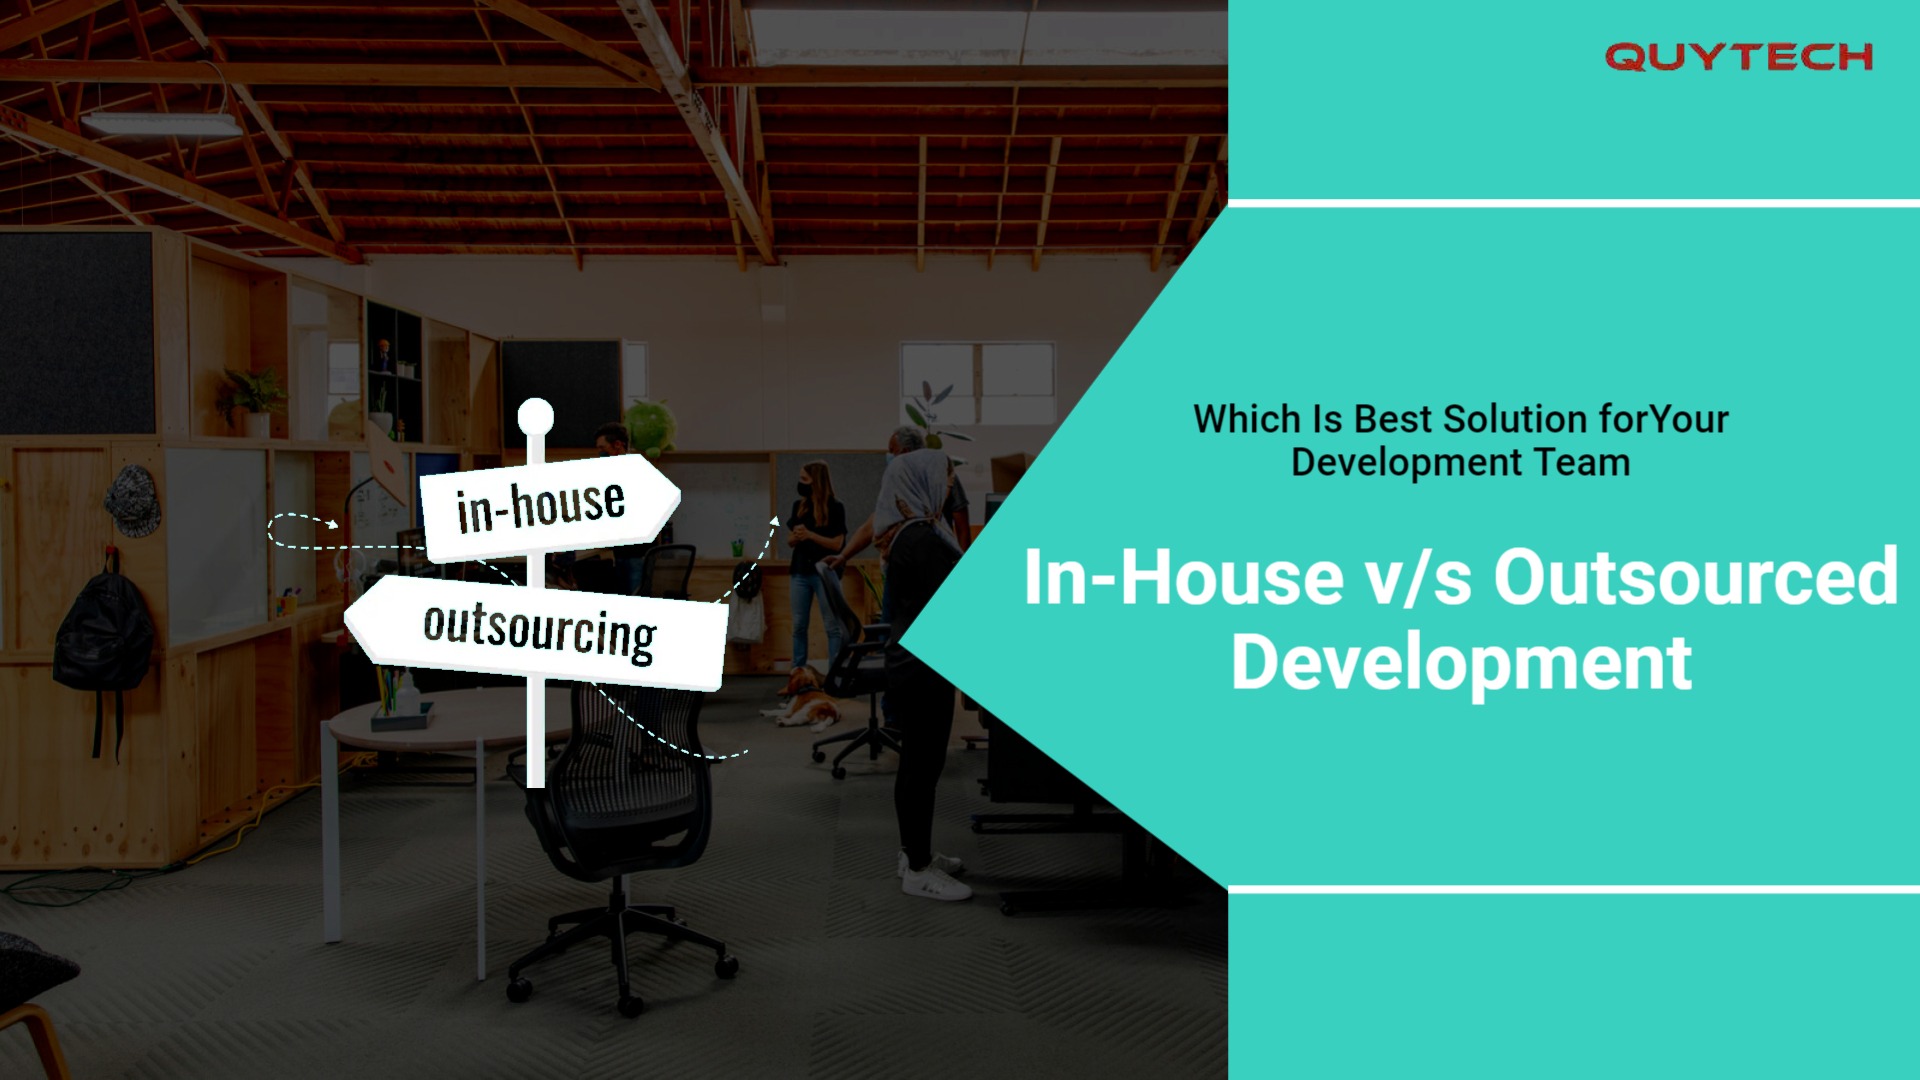 inhouse vs outsourrced development